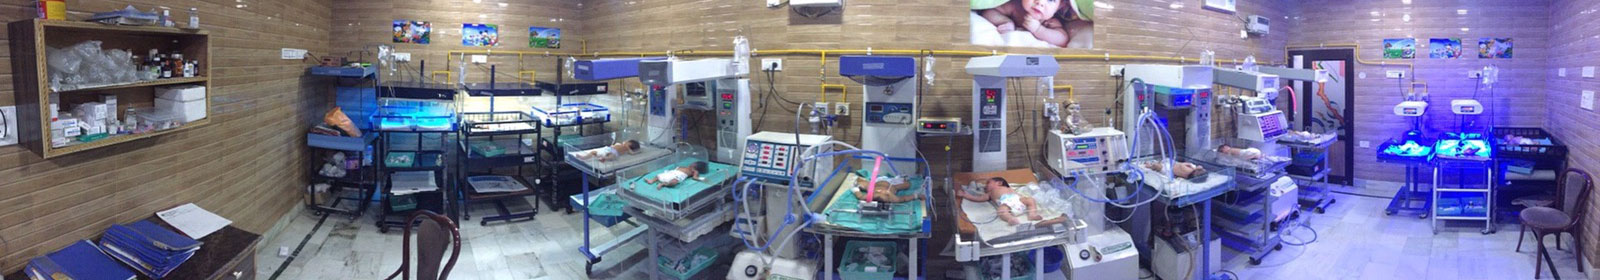 neonatology header image